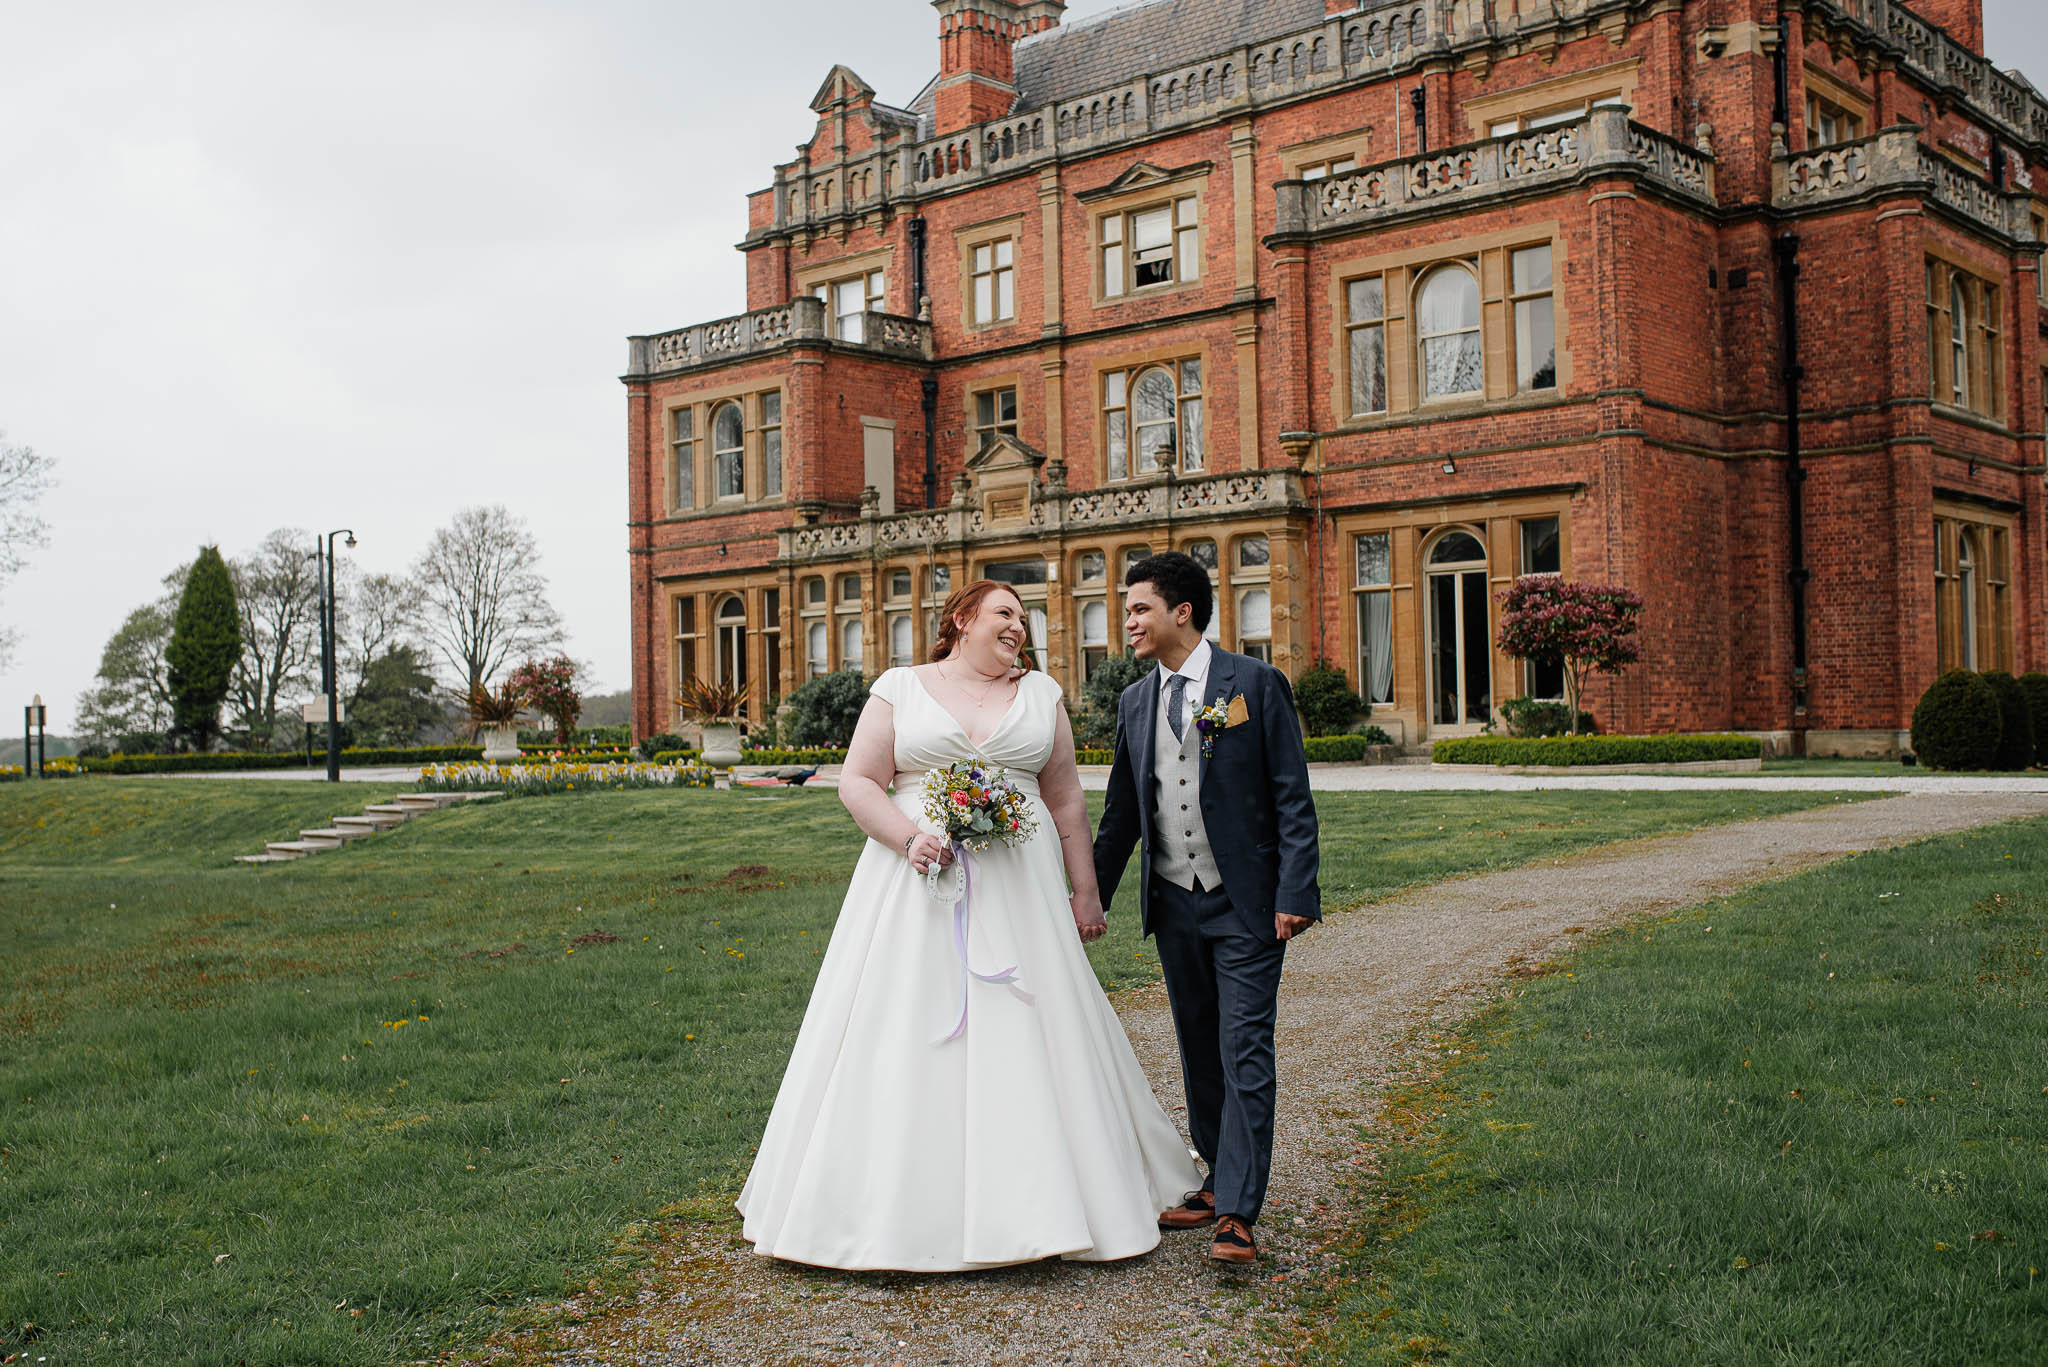 Getting married at Rossington Hall Wedding Venue – Unforgettable Weddings